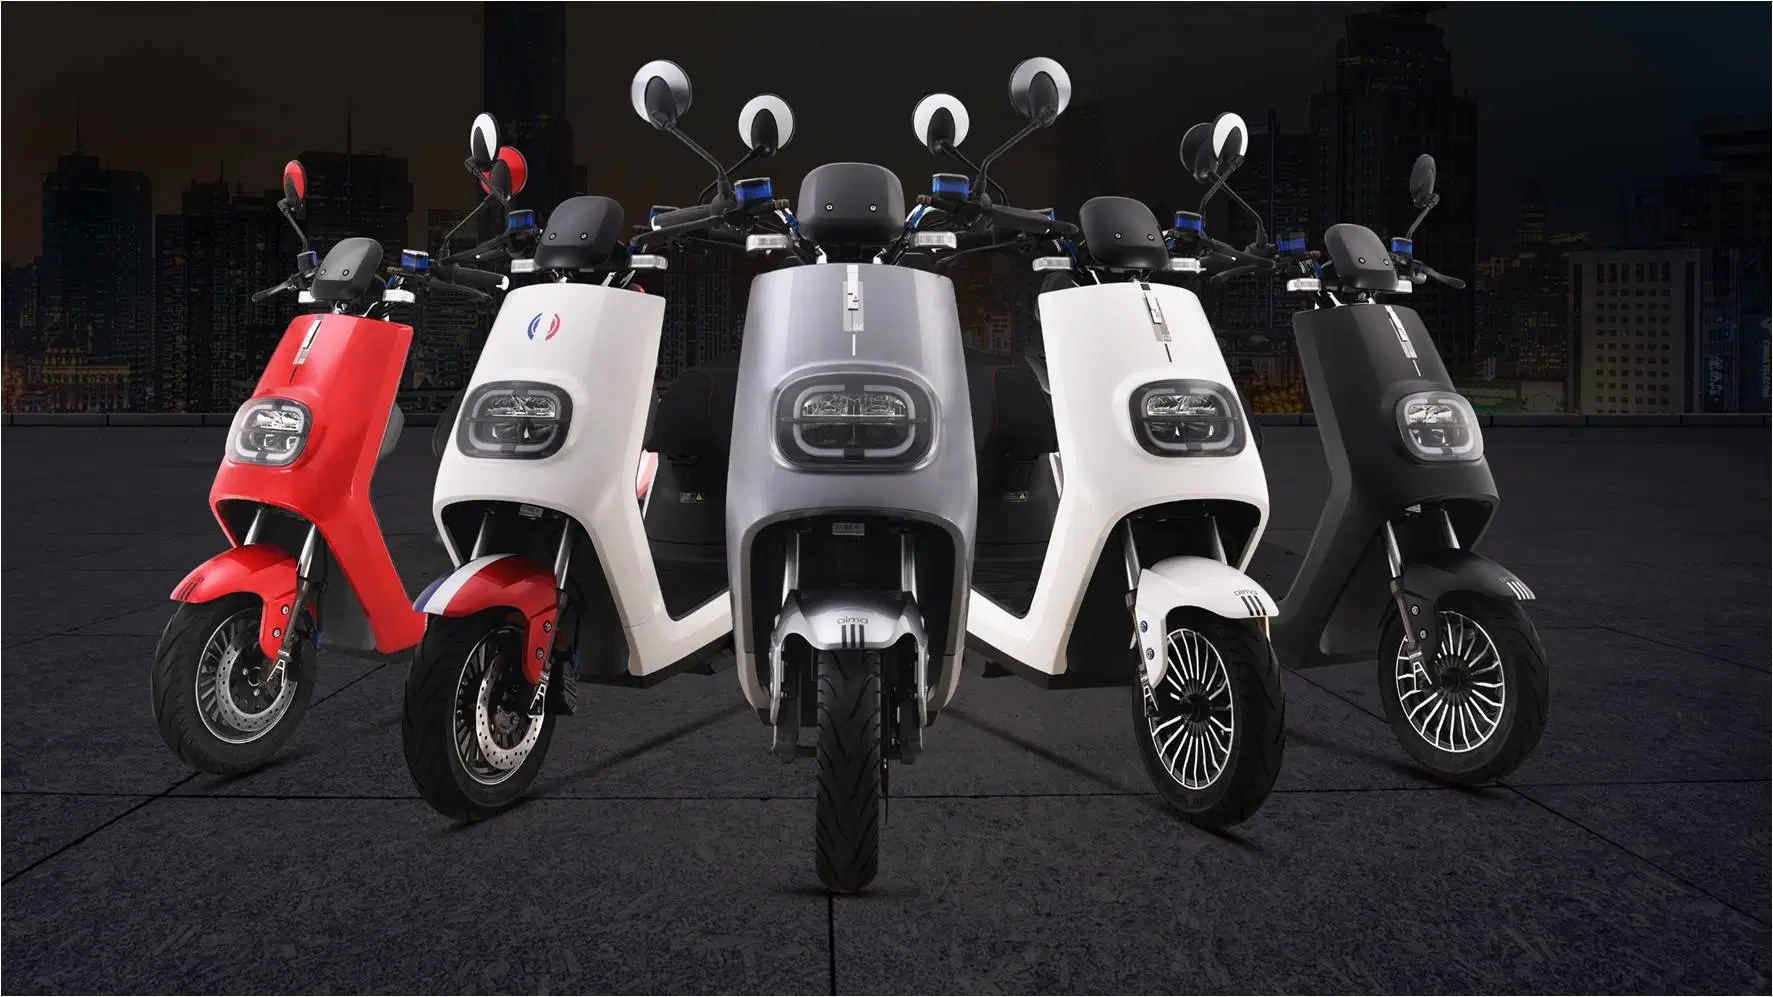 Aima Popular Nuevo modelo de motocicleta eléctrica